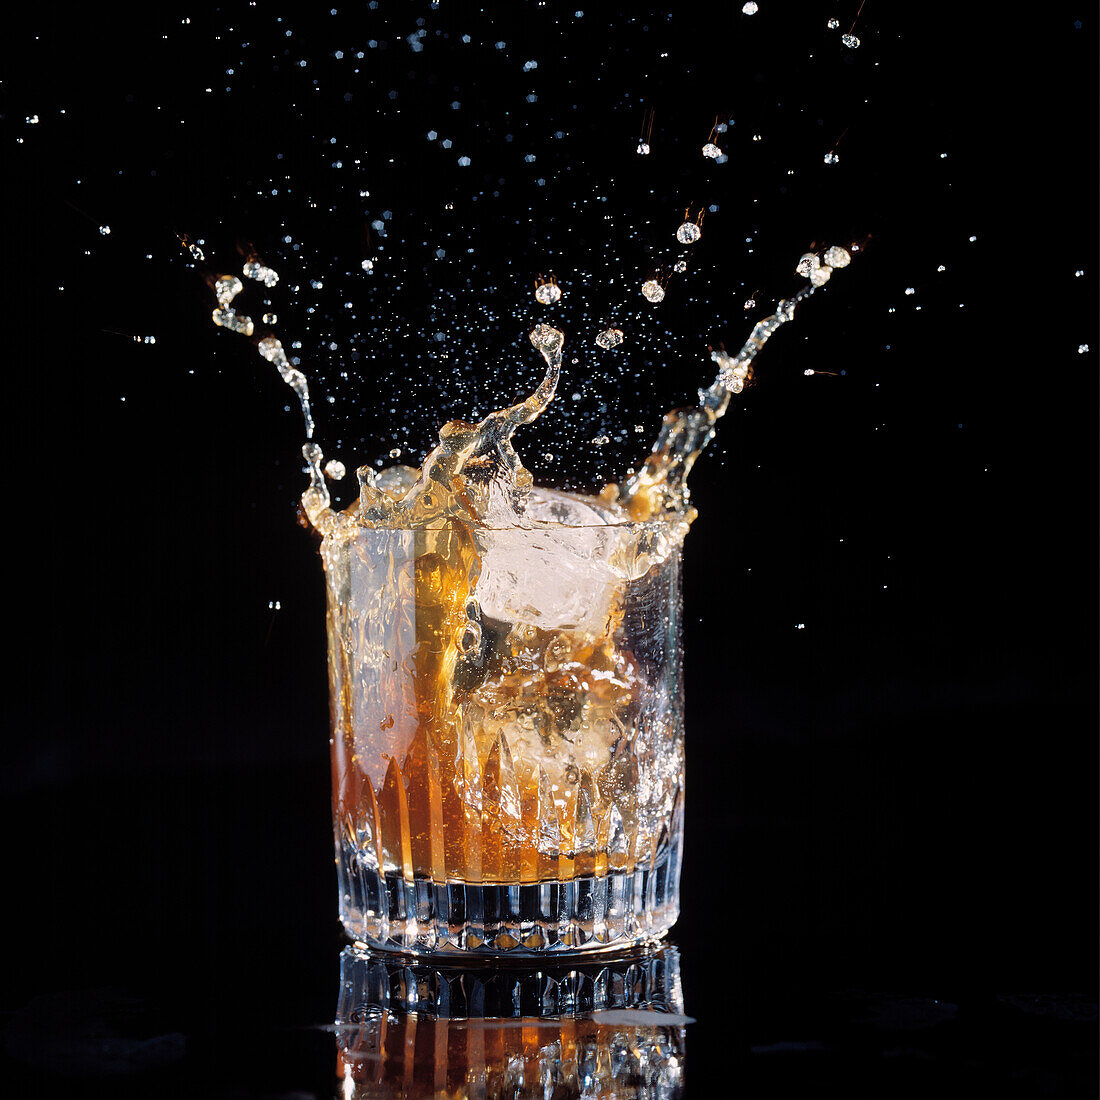 Ice Splashing into a Tumbler of Whiskey